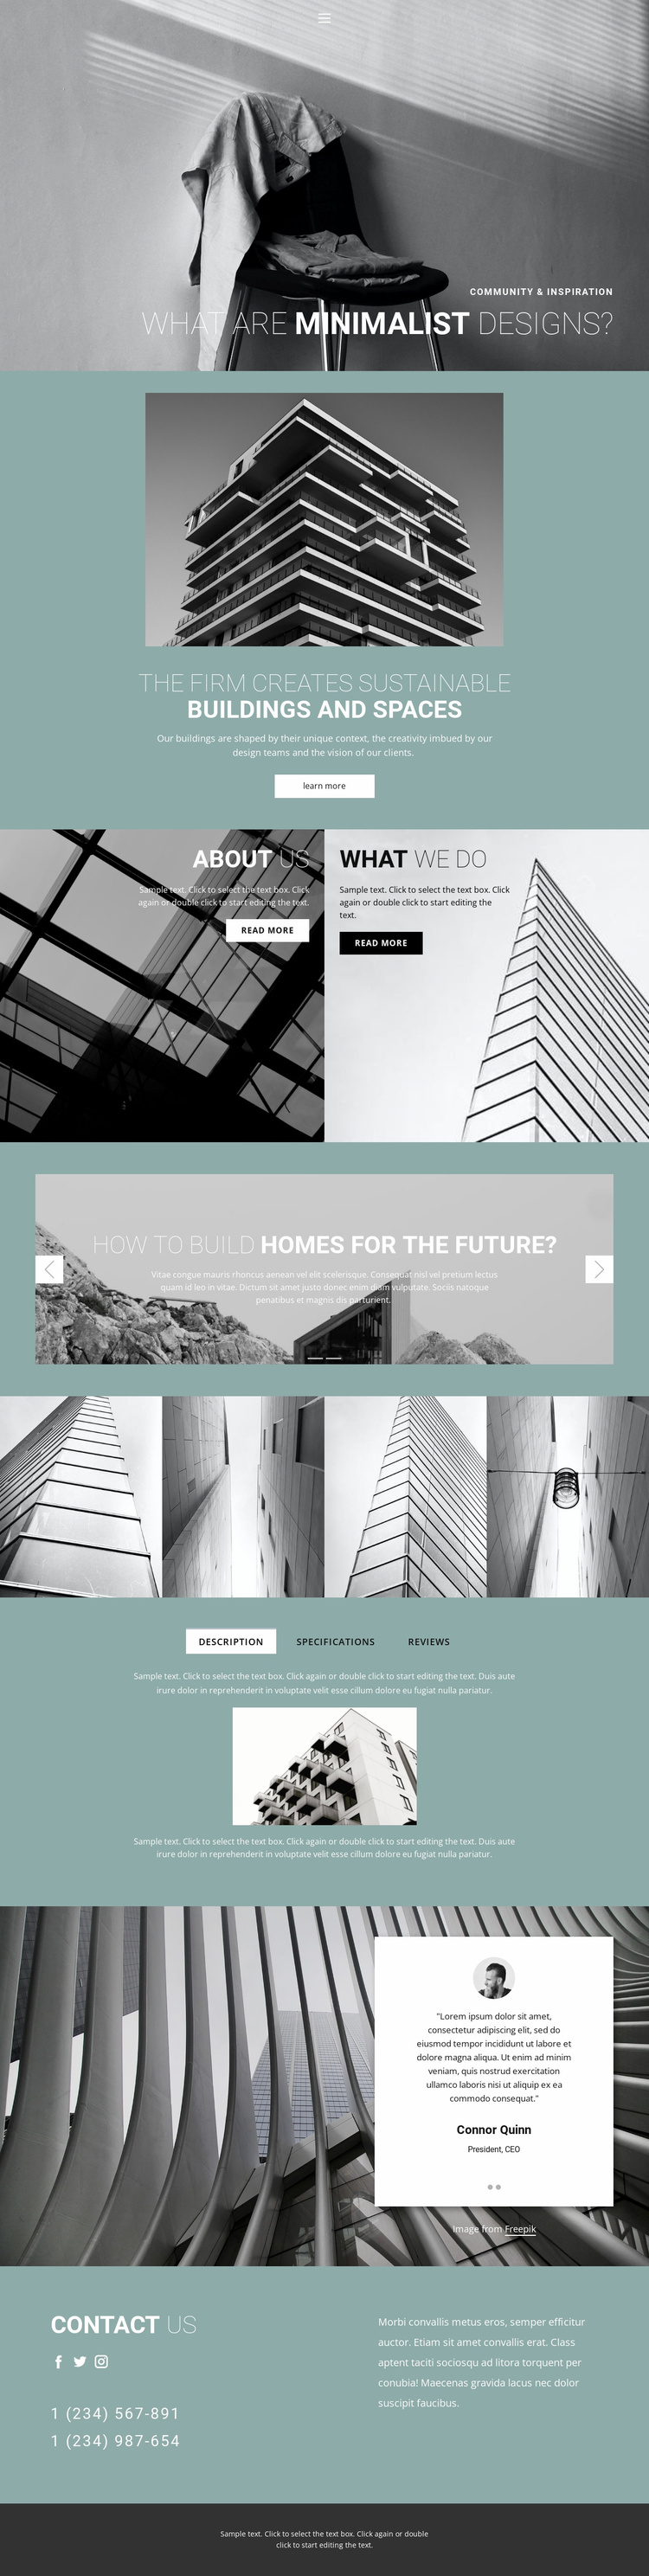 Perfect architecture ideas Website Template